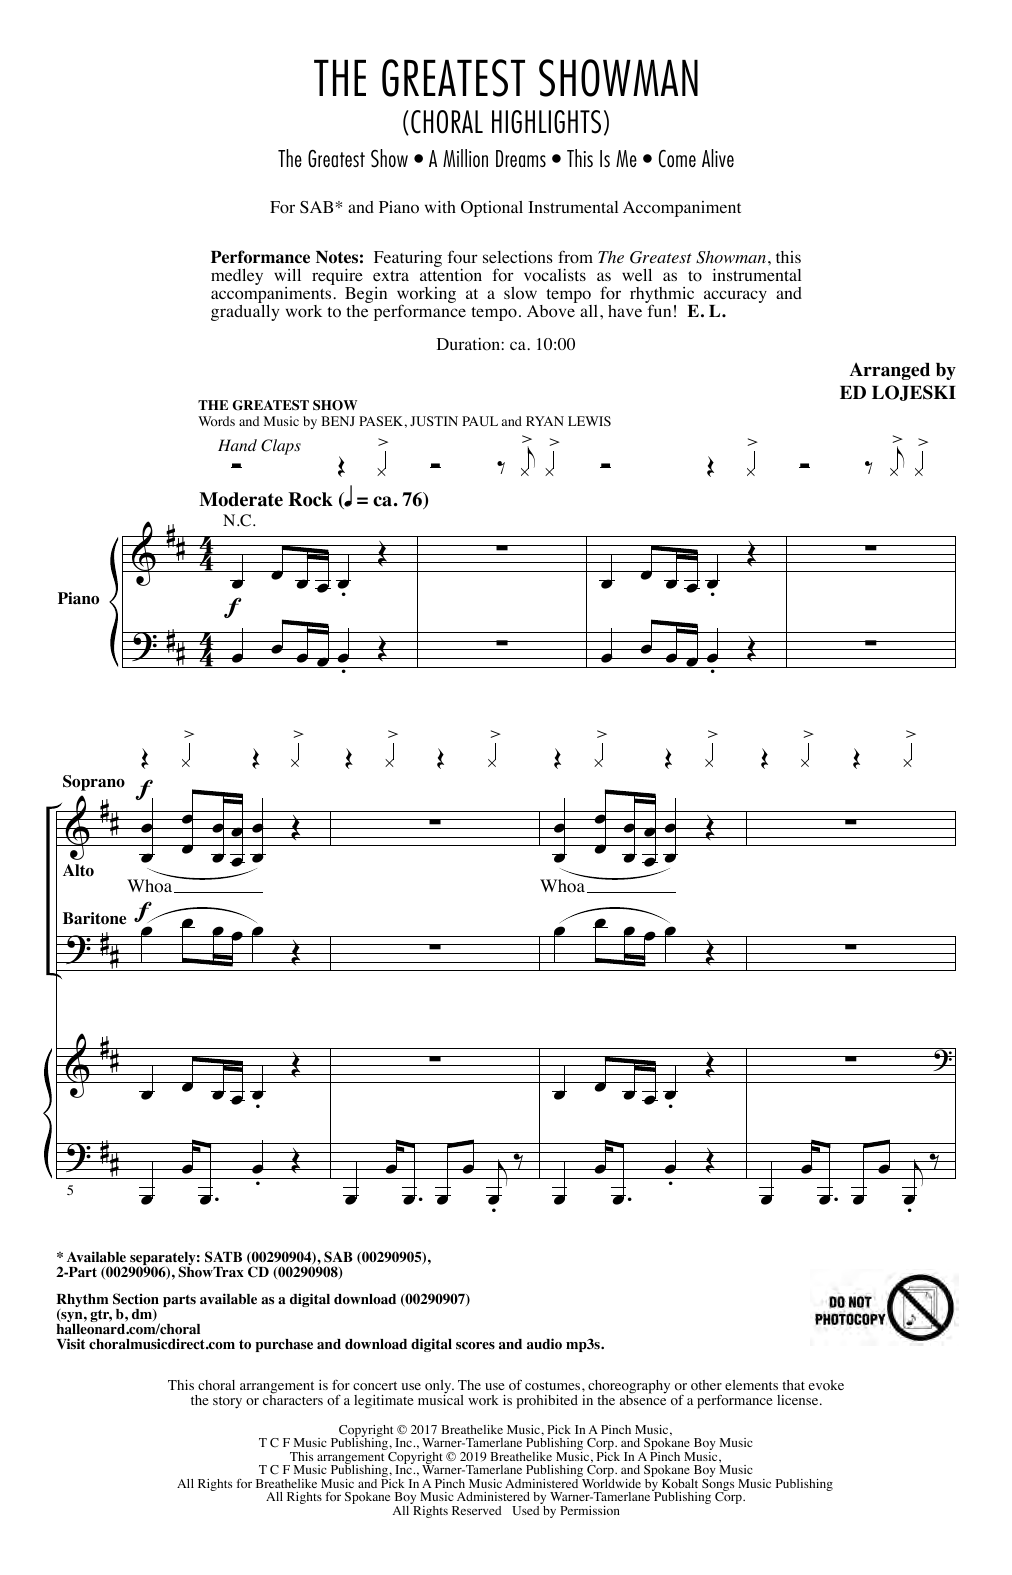 Pasek & Paul The Greatest Showman (Choral Highlights) (arr. Ed Lojeski) Sheet Music Notes & Chords for SATB Choir - Download or Print PDF